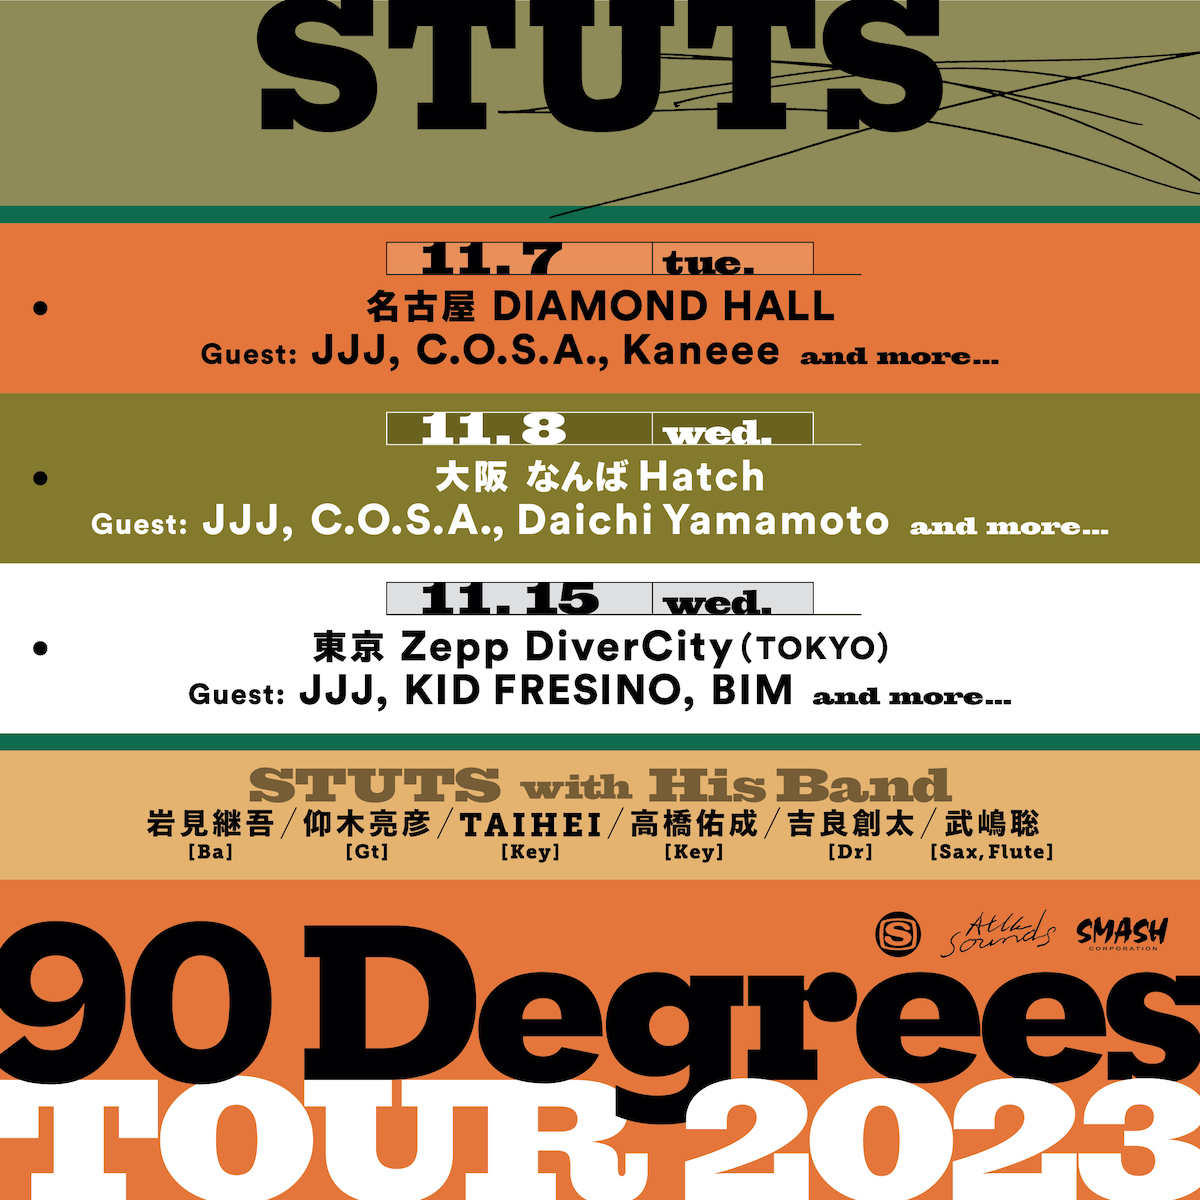 STUTS “90 Degrees” TOUR 2023